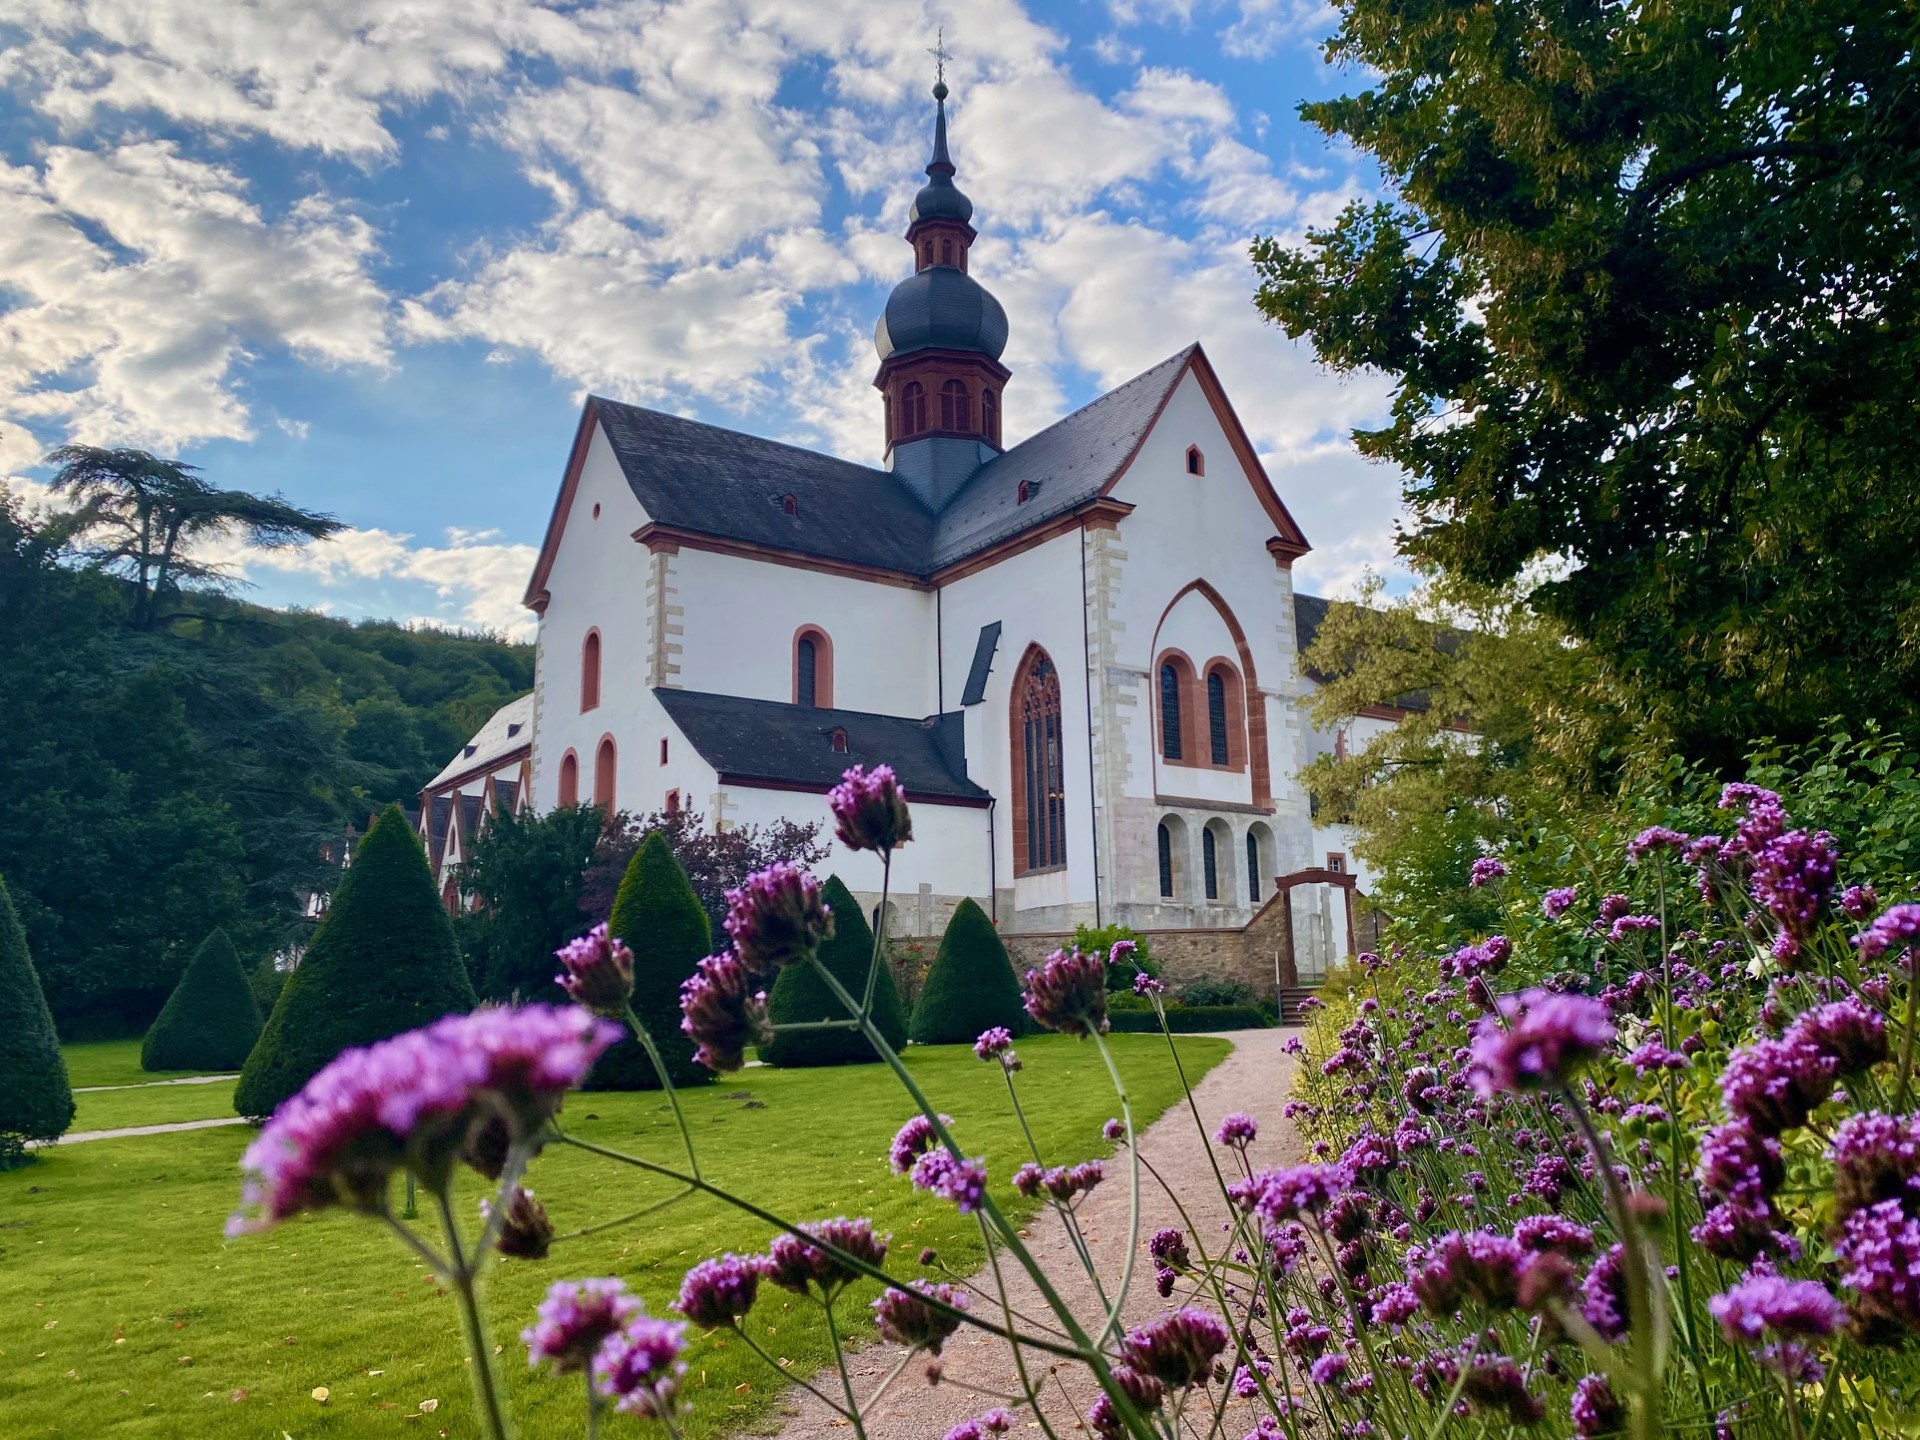 Kloster Eberbach, Tyskland, Germany, kirke